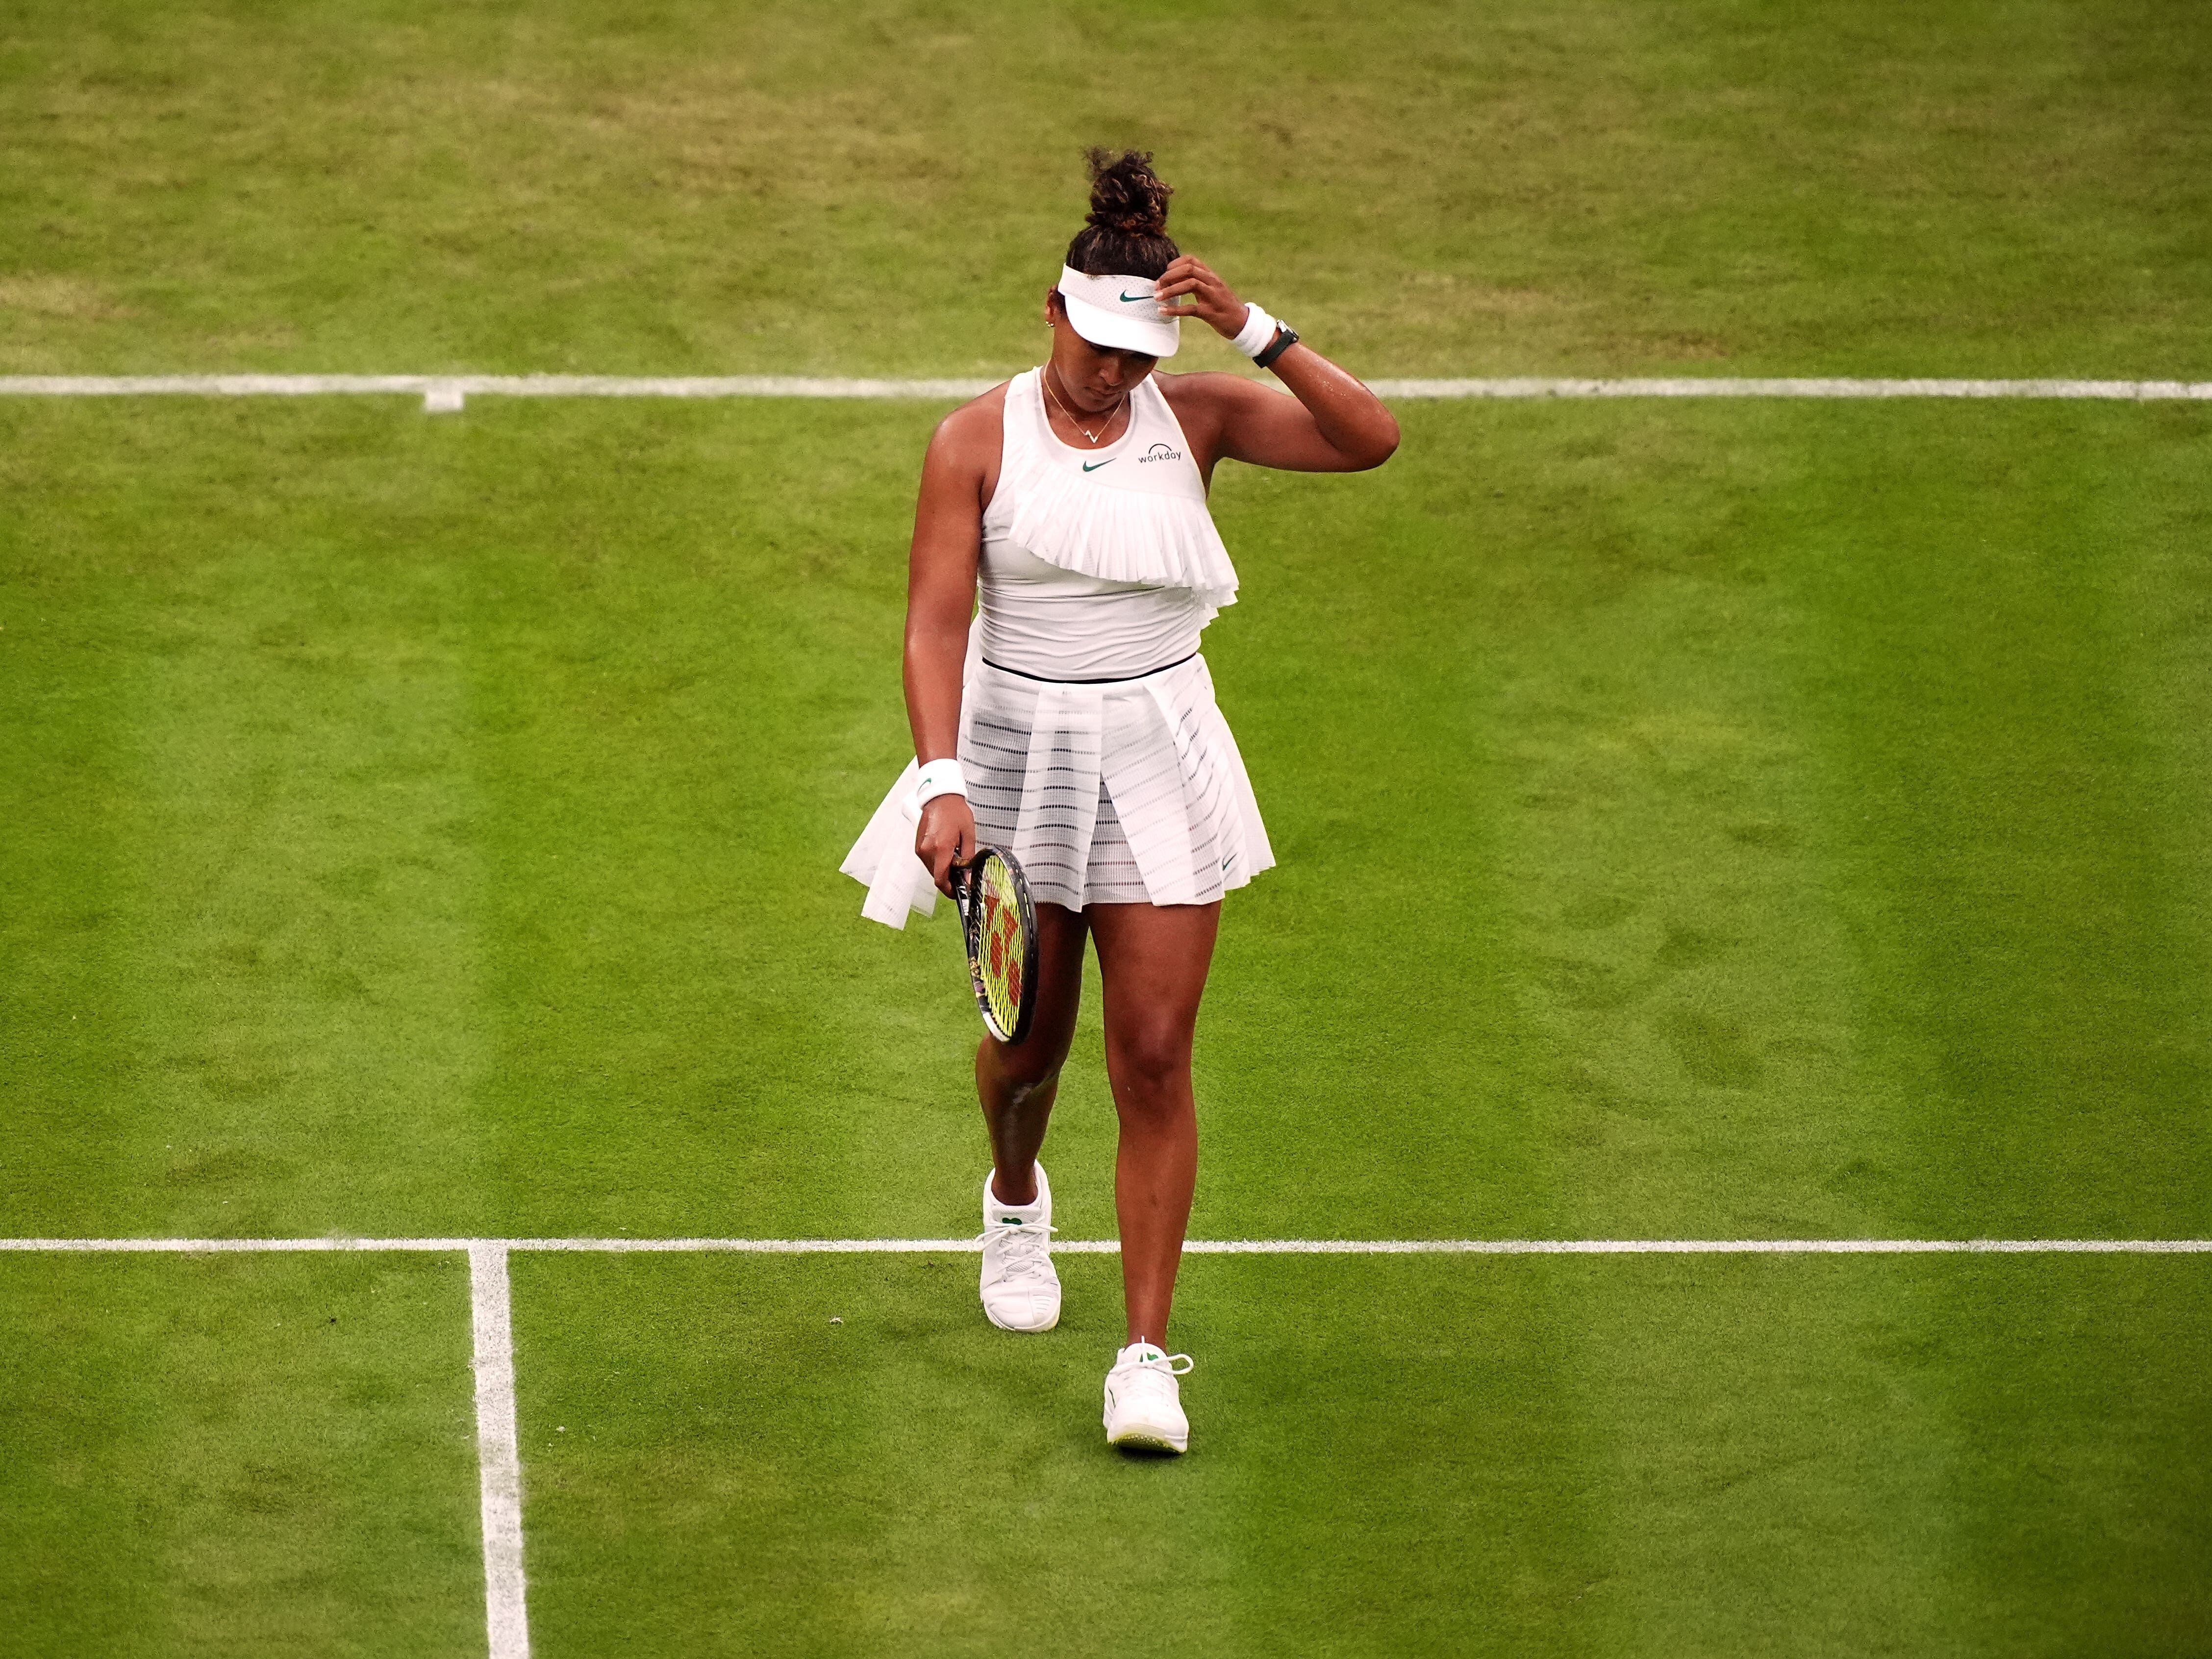 Naomi Osaka’s Wimbledon return abruptly halted by Emma Navarro